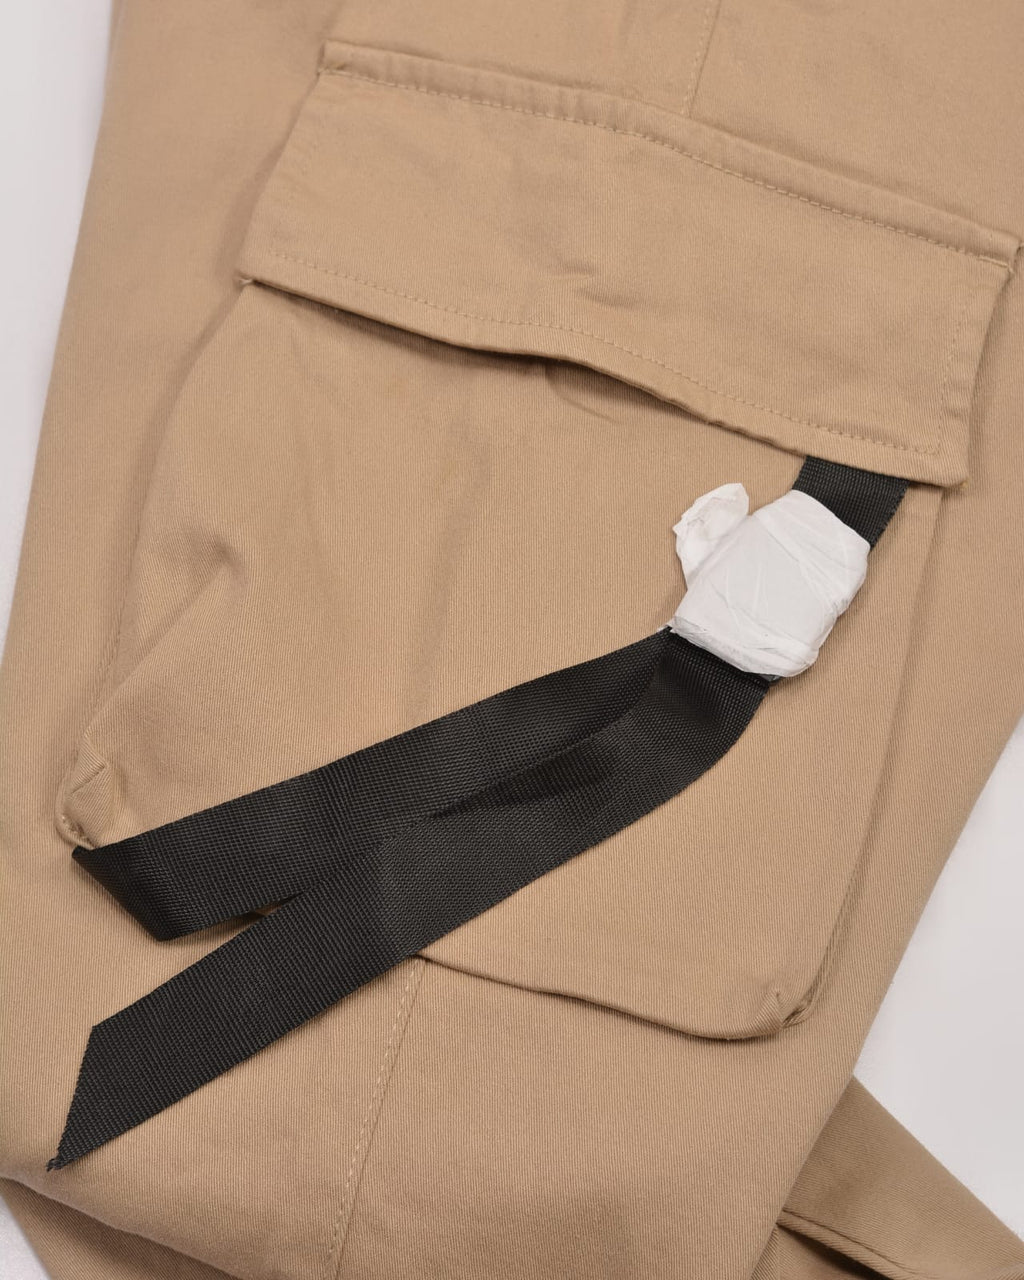 Terranova Men's cargo trousers with contrasting stitching KHAKI